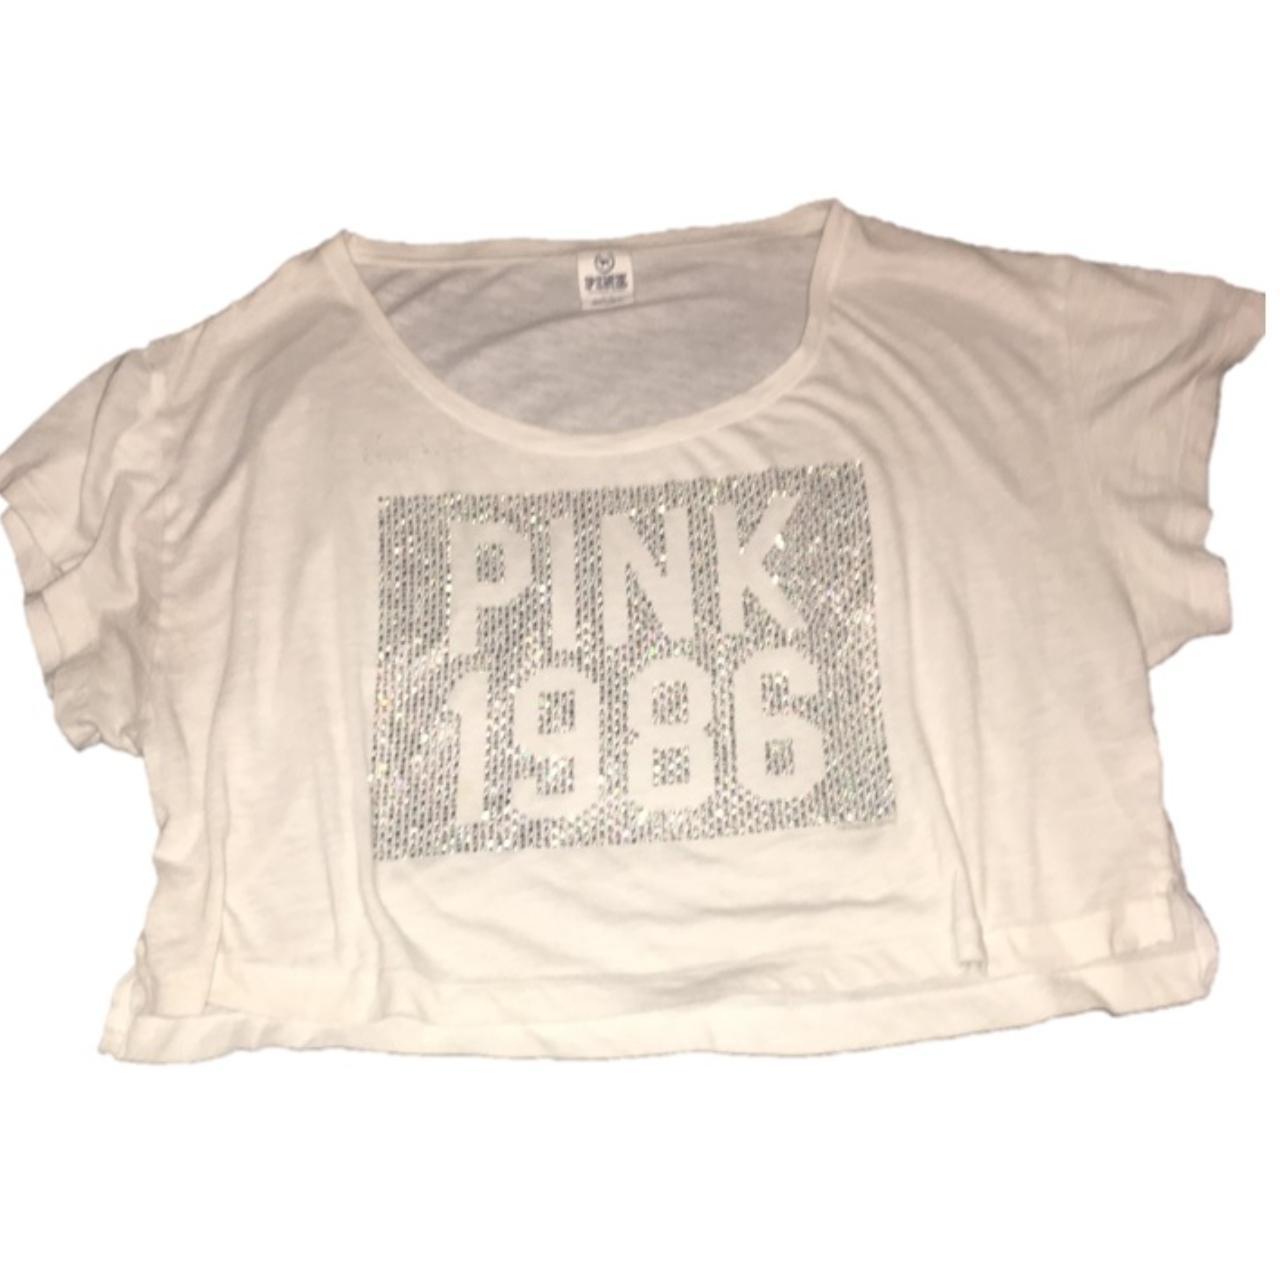 Victoria's Secret Pink 1986 rhinestone semi sheer... - Depop